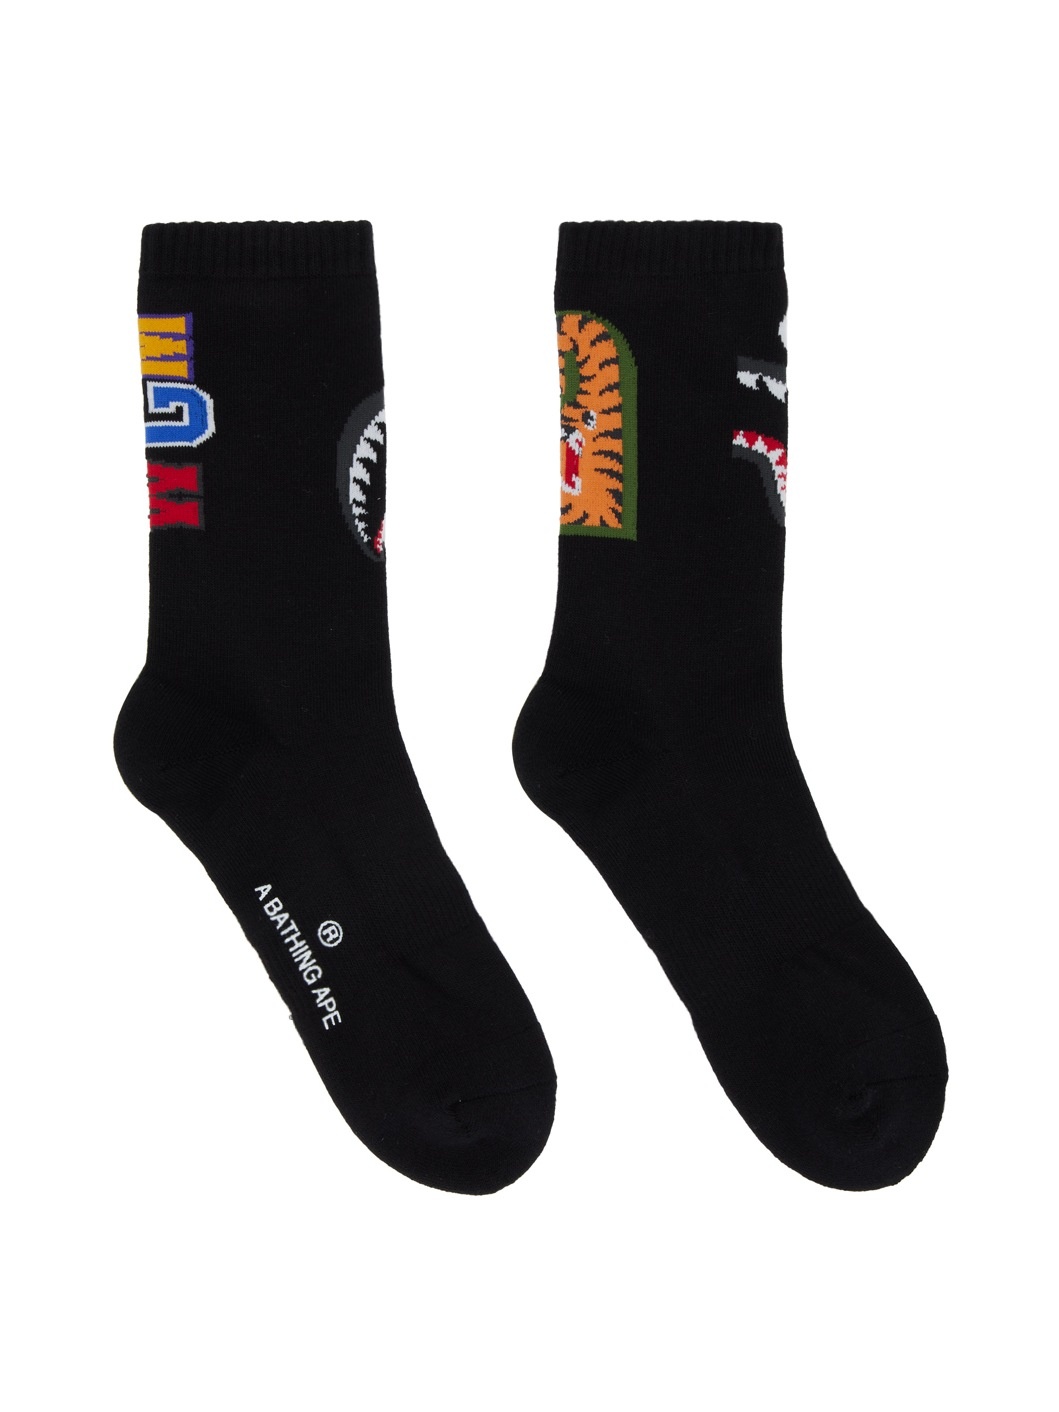 Black Shark Socks - 1